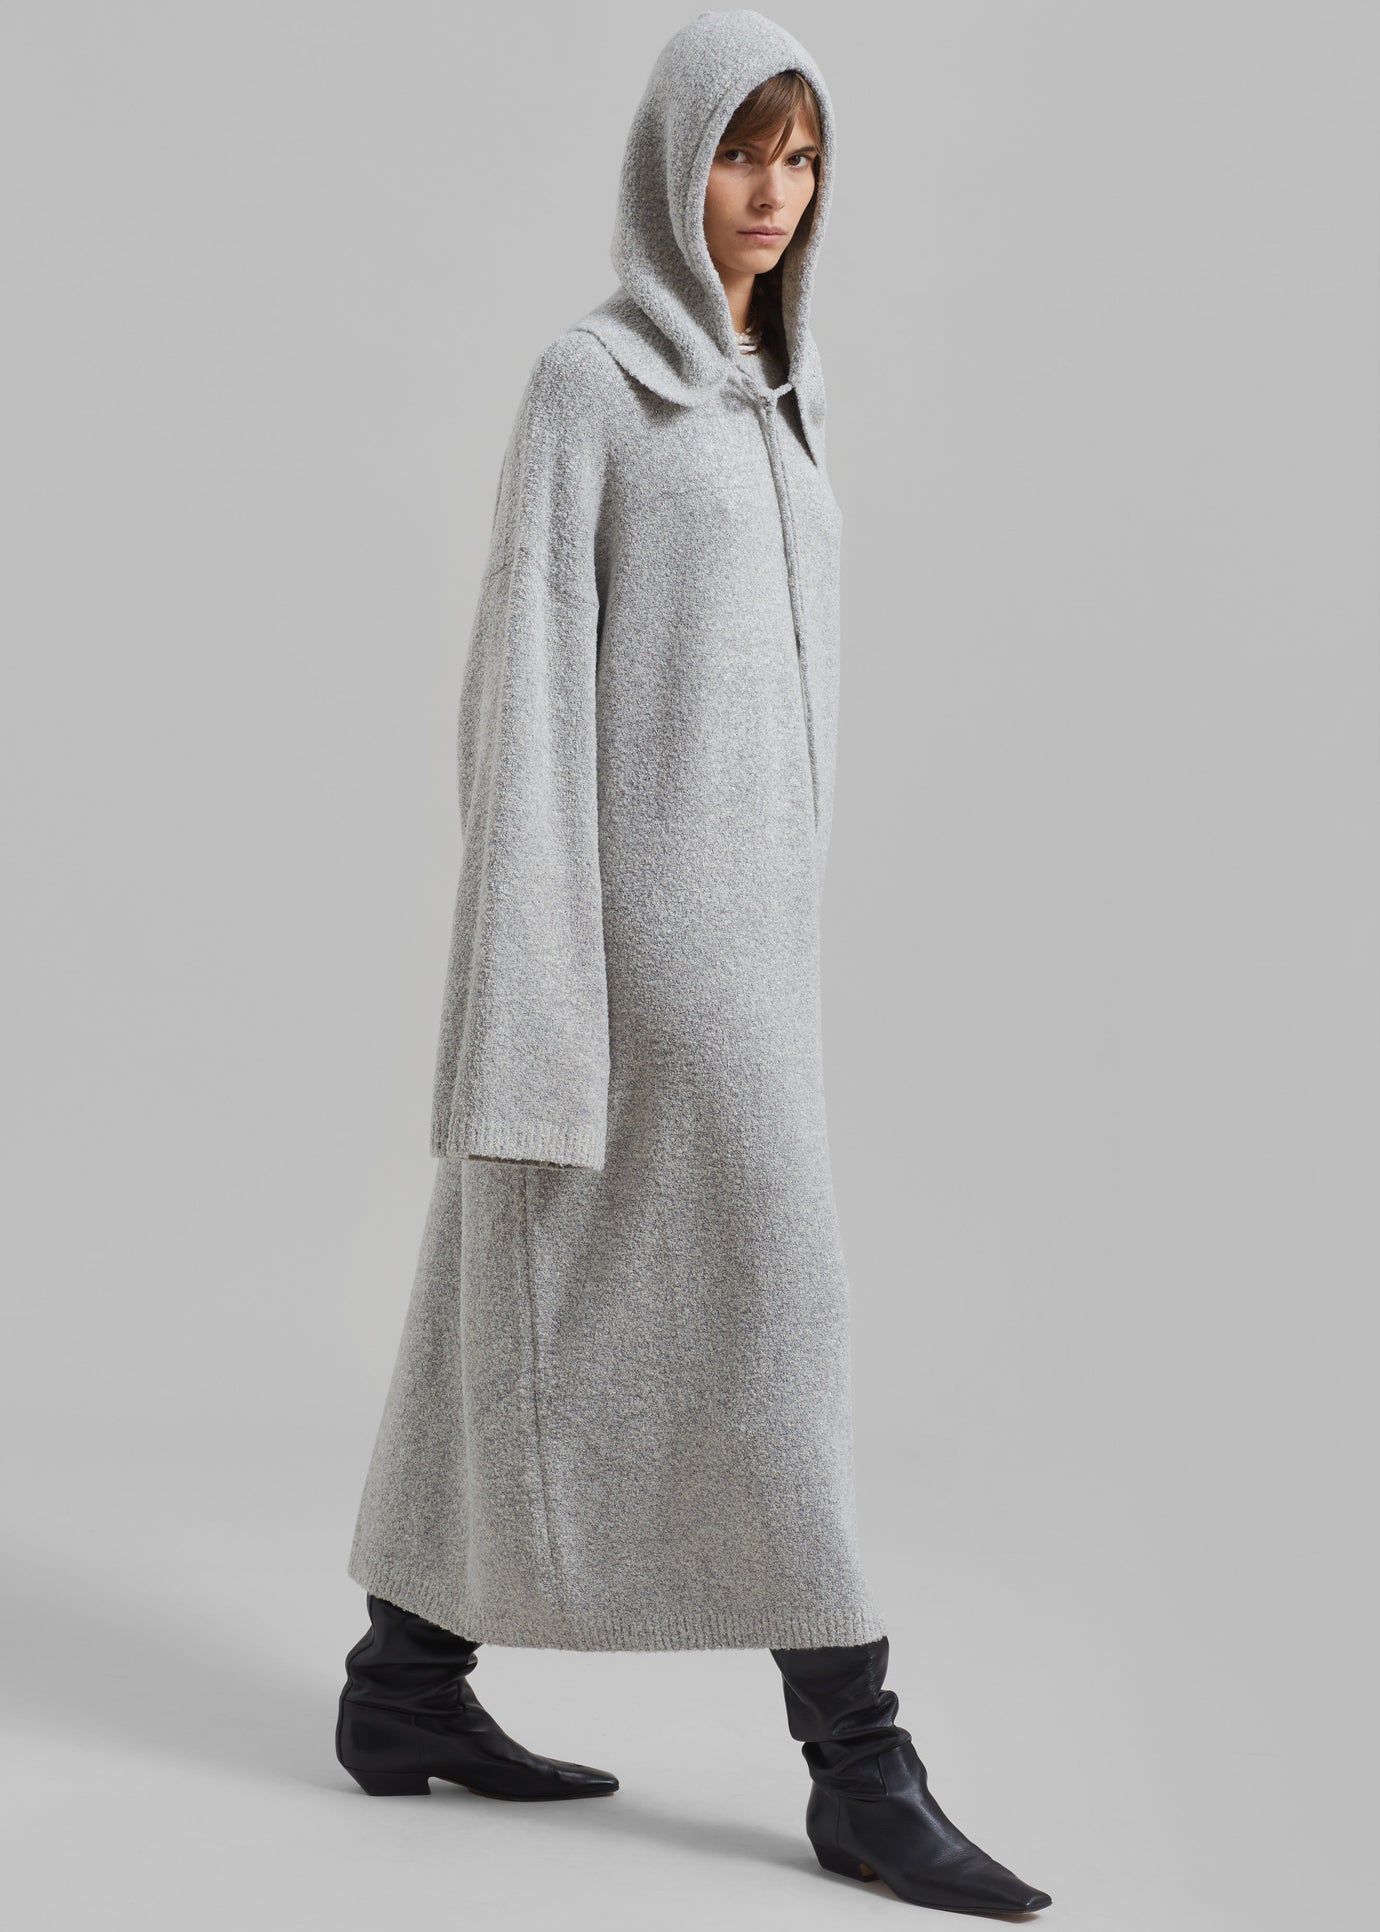 Alba Long Hooded Dress - Grey